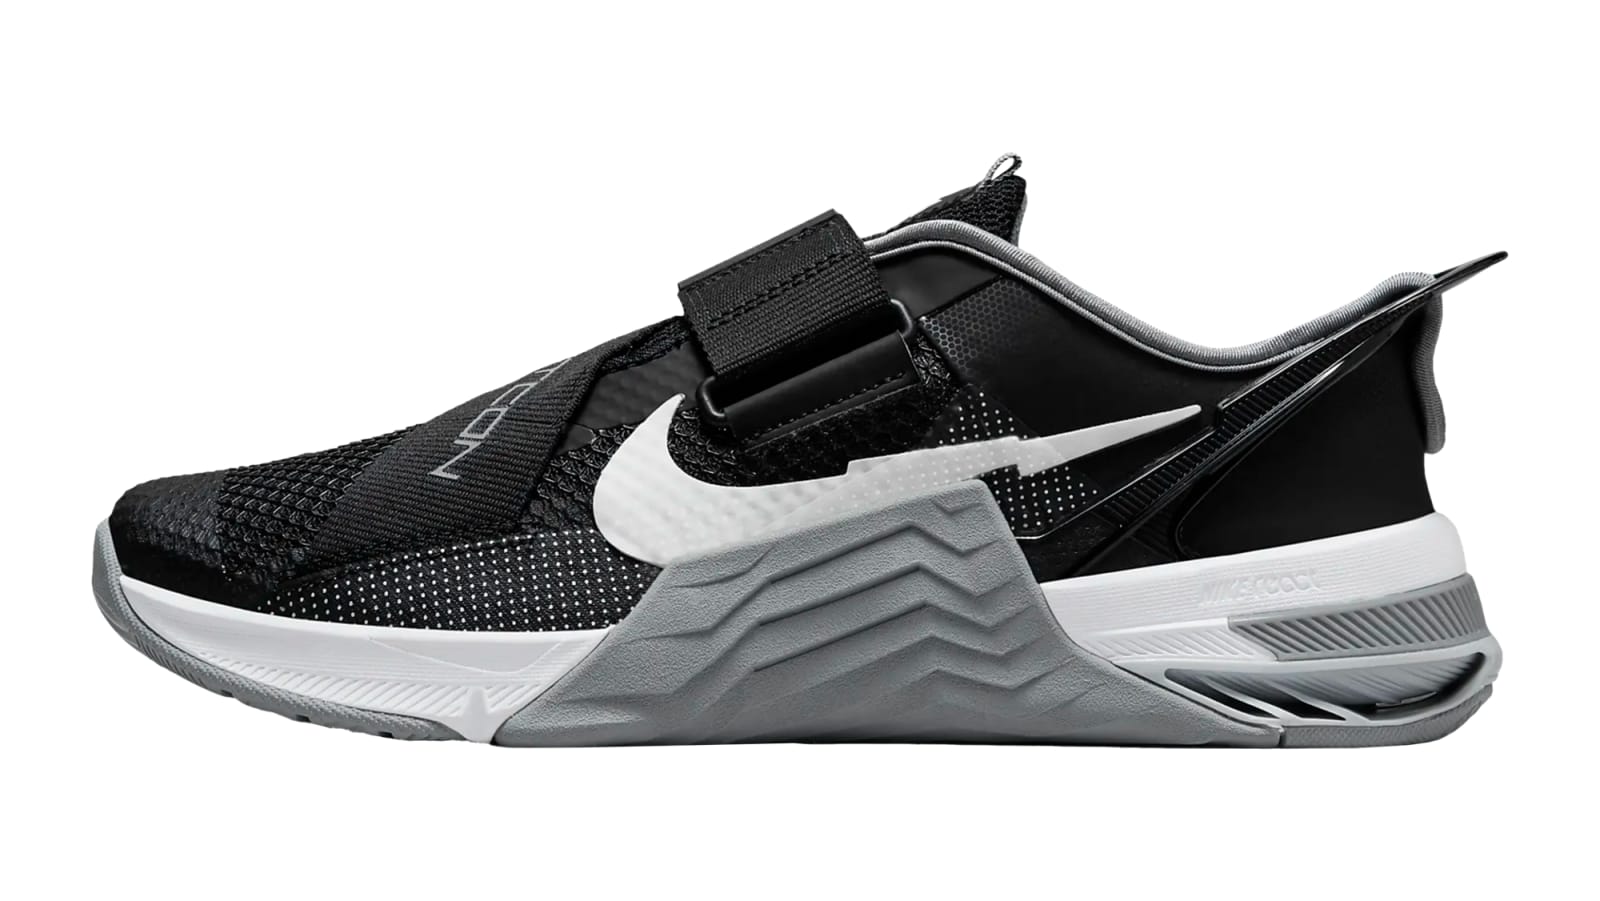 Nike SF pop-up will look like a giant shoe box